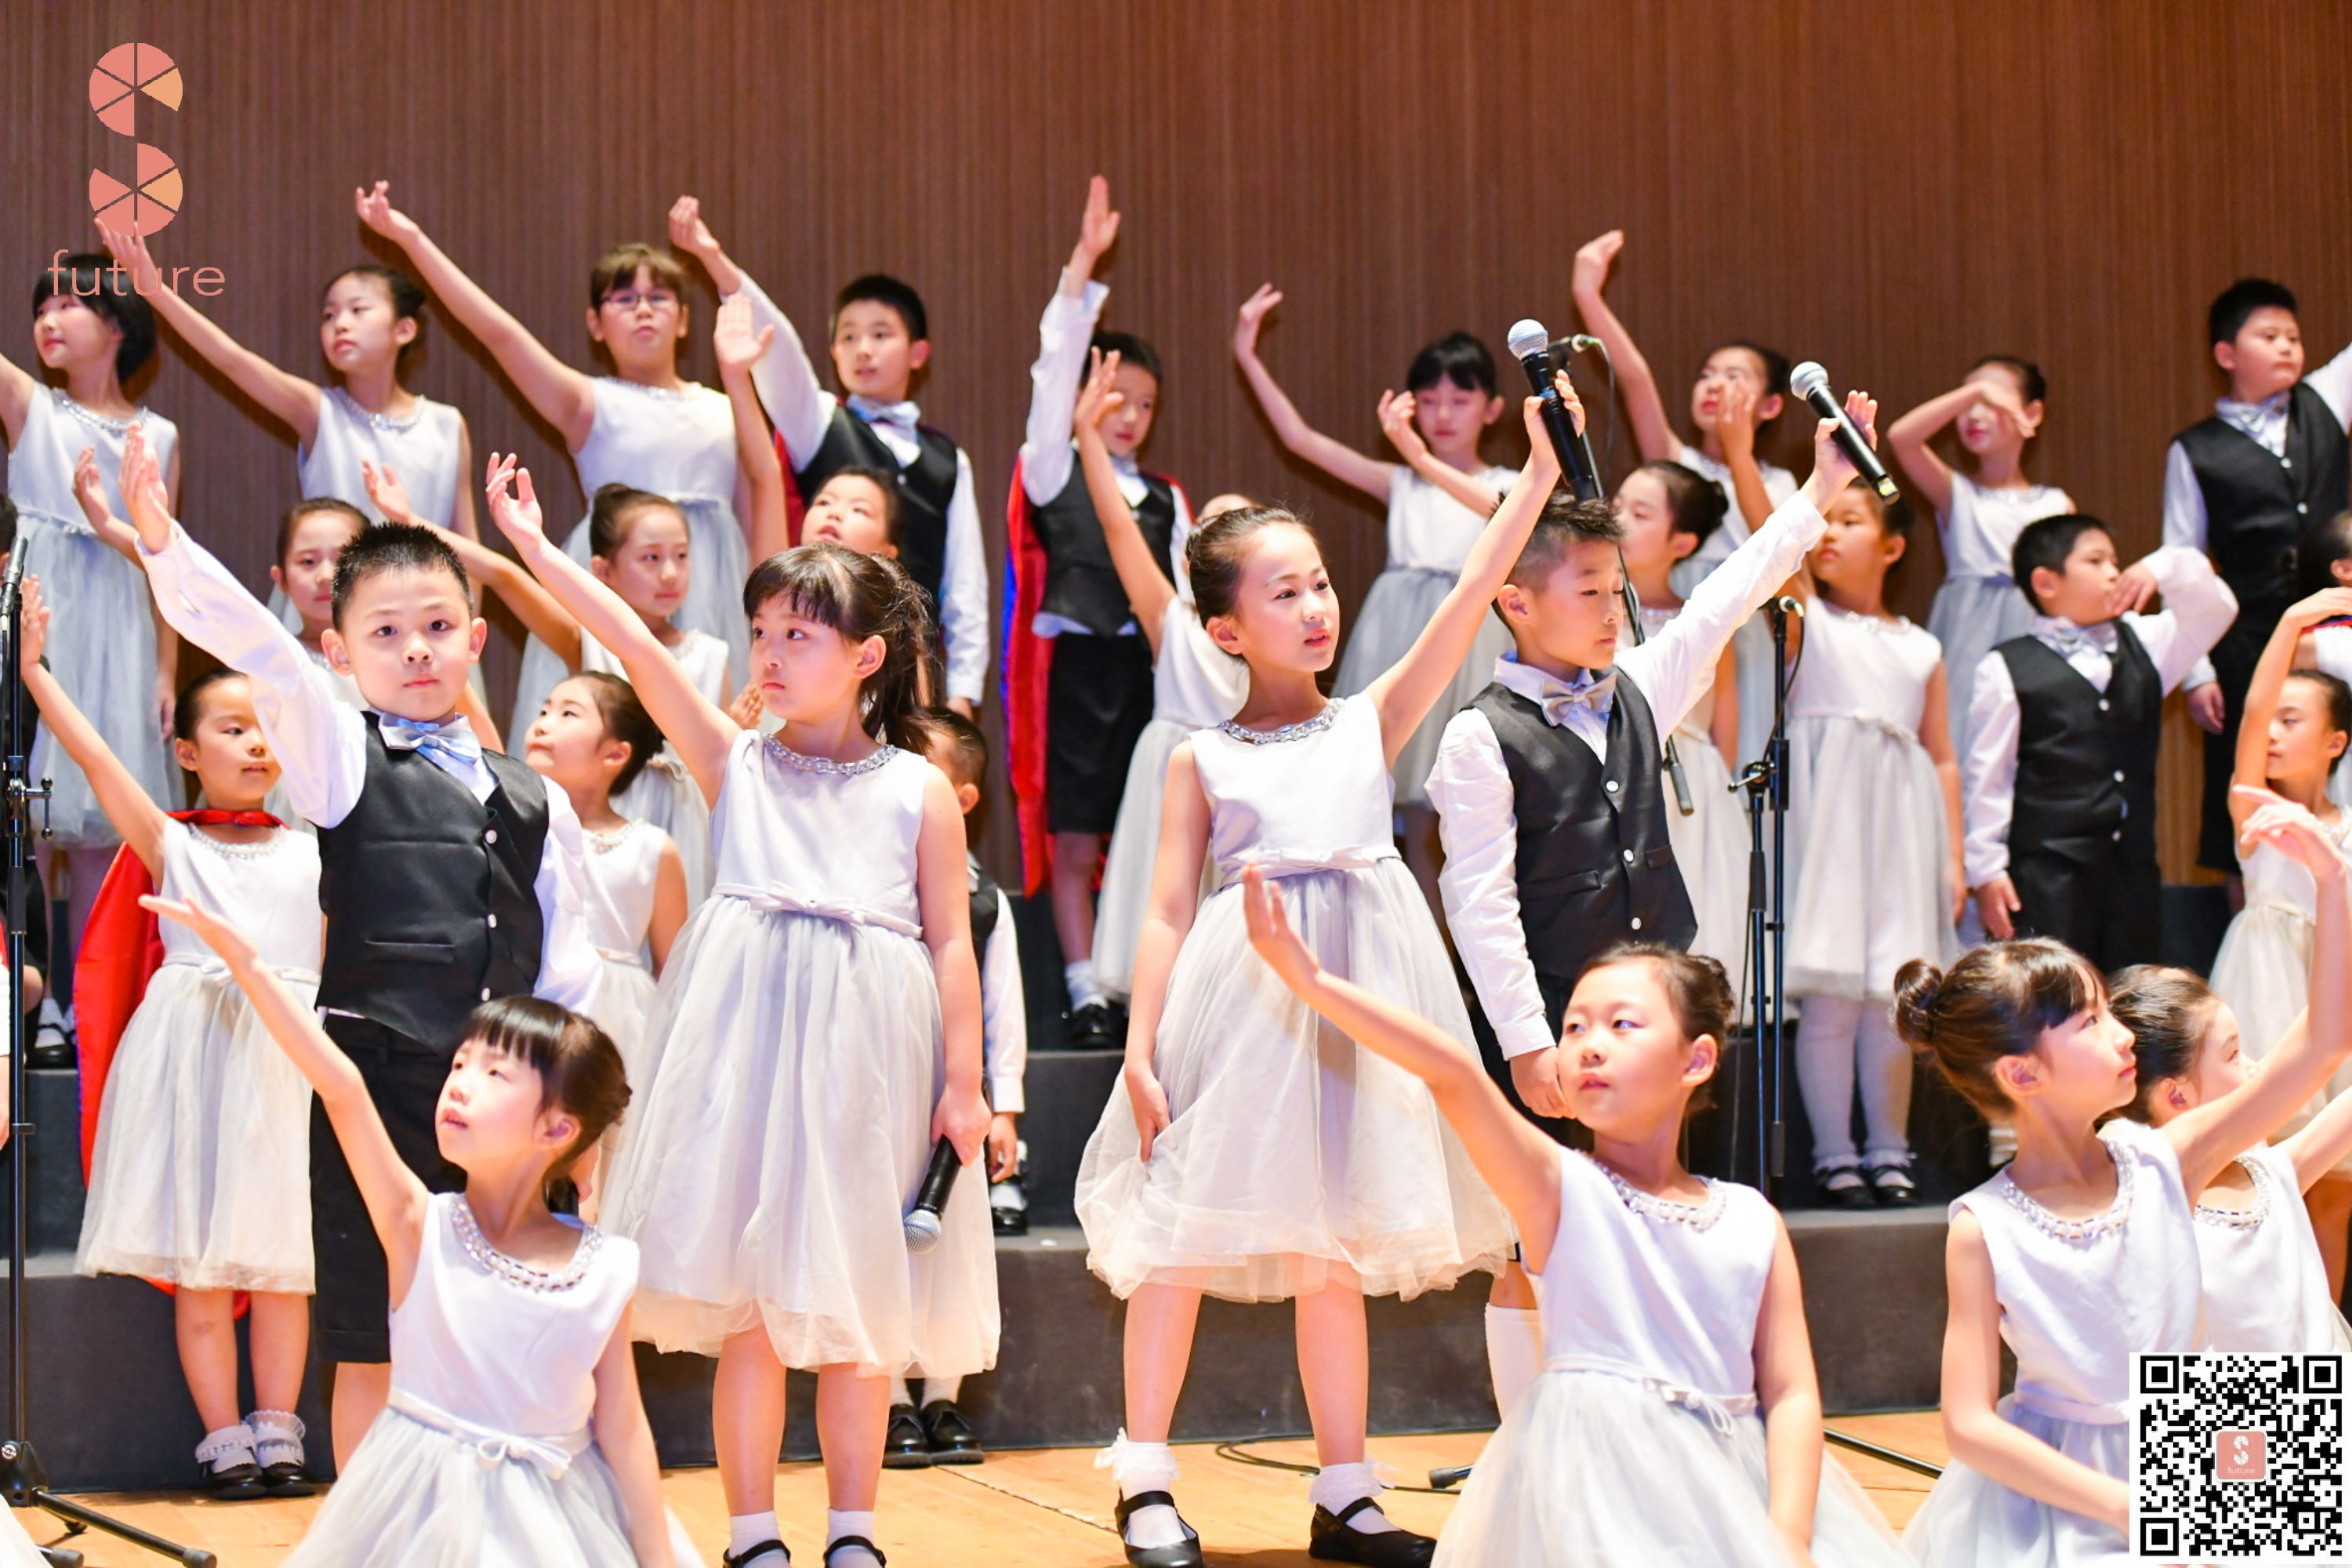 s-future艺术团丨顶尖儿童合唱团的听觉盛宴